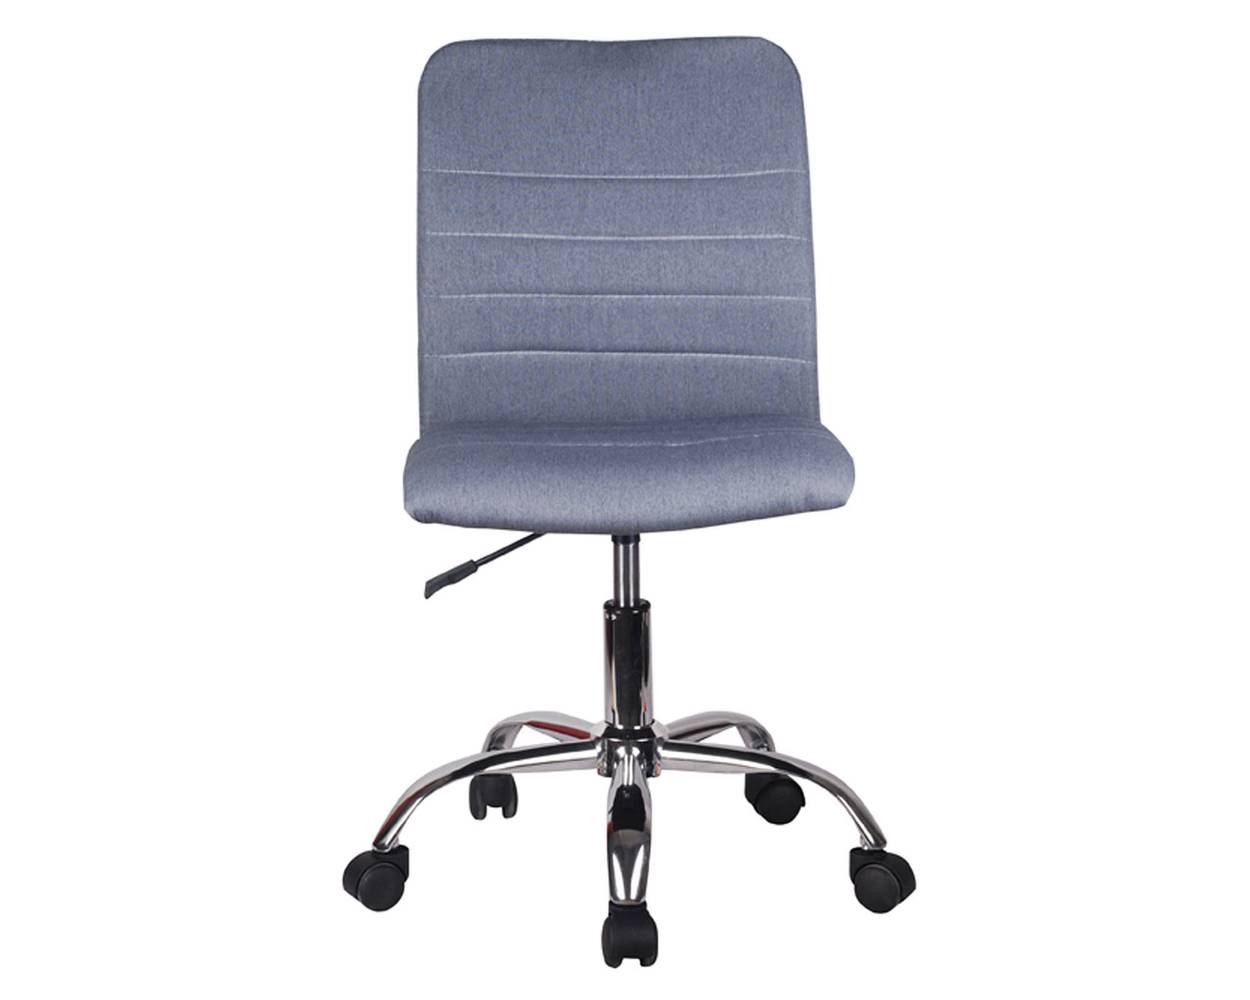 M+design silla pc tela gris oscuro (1 u)